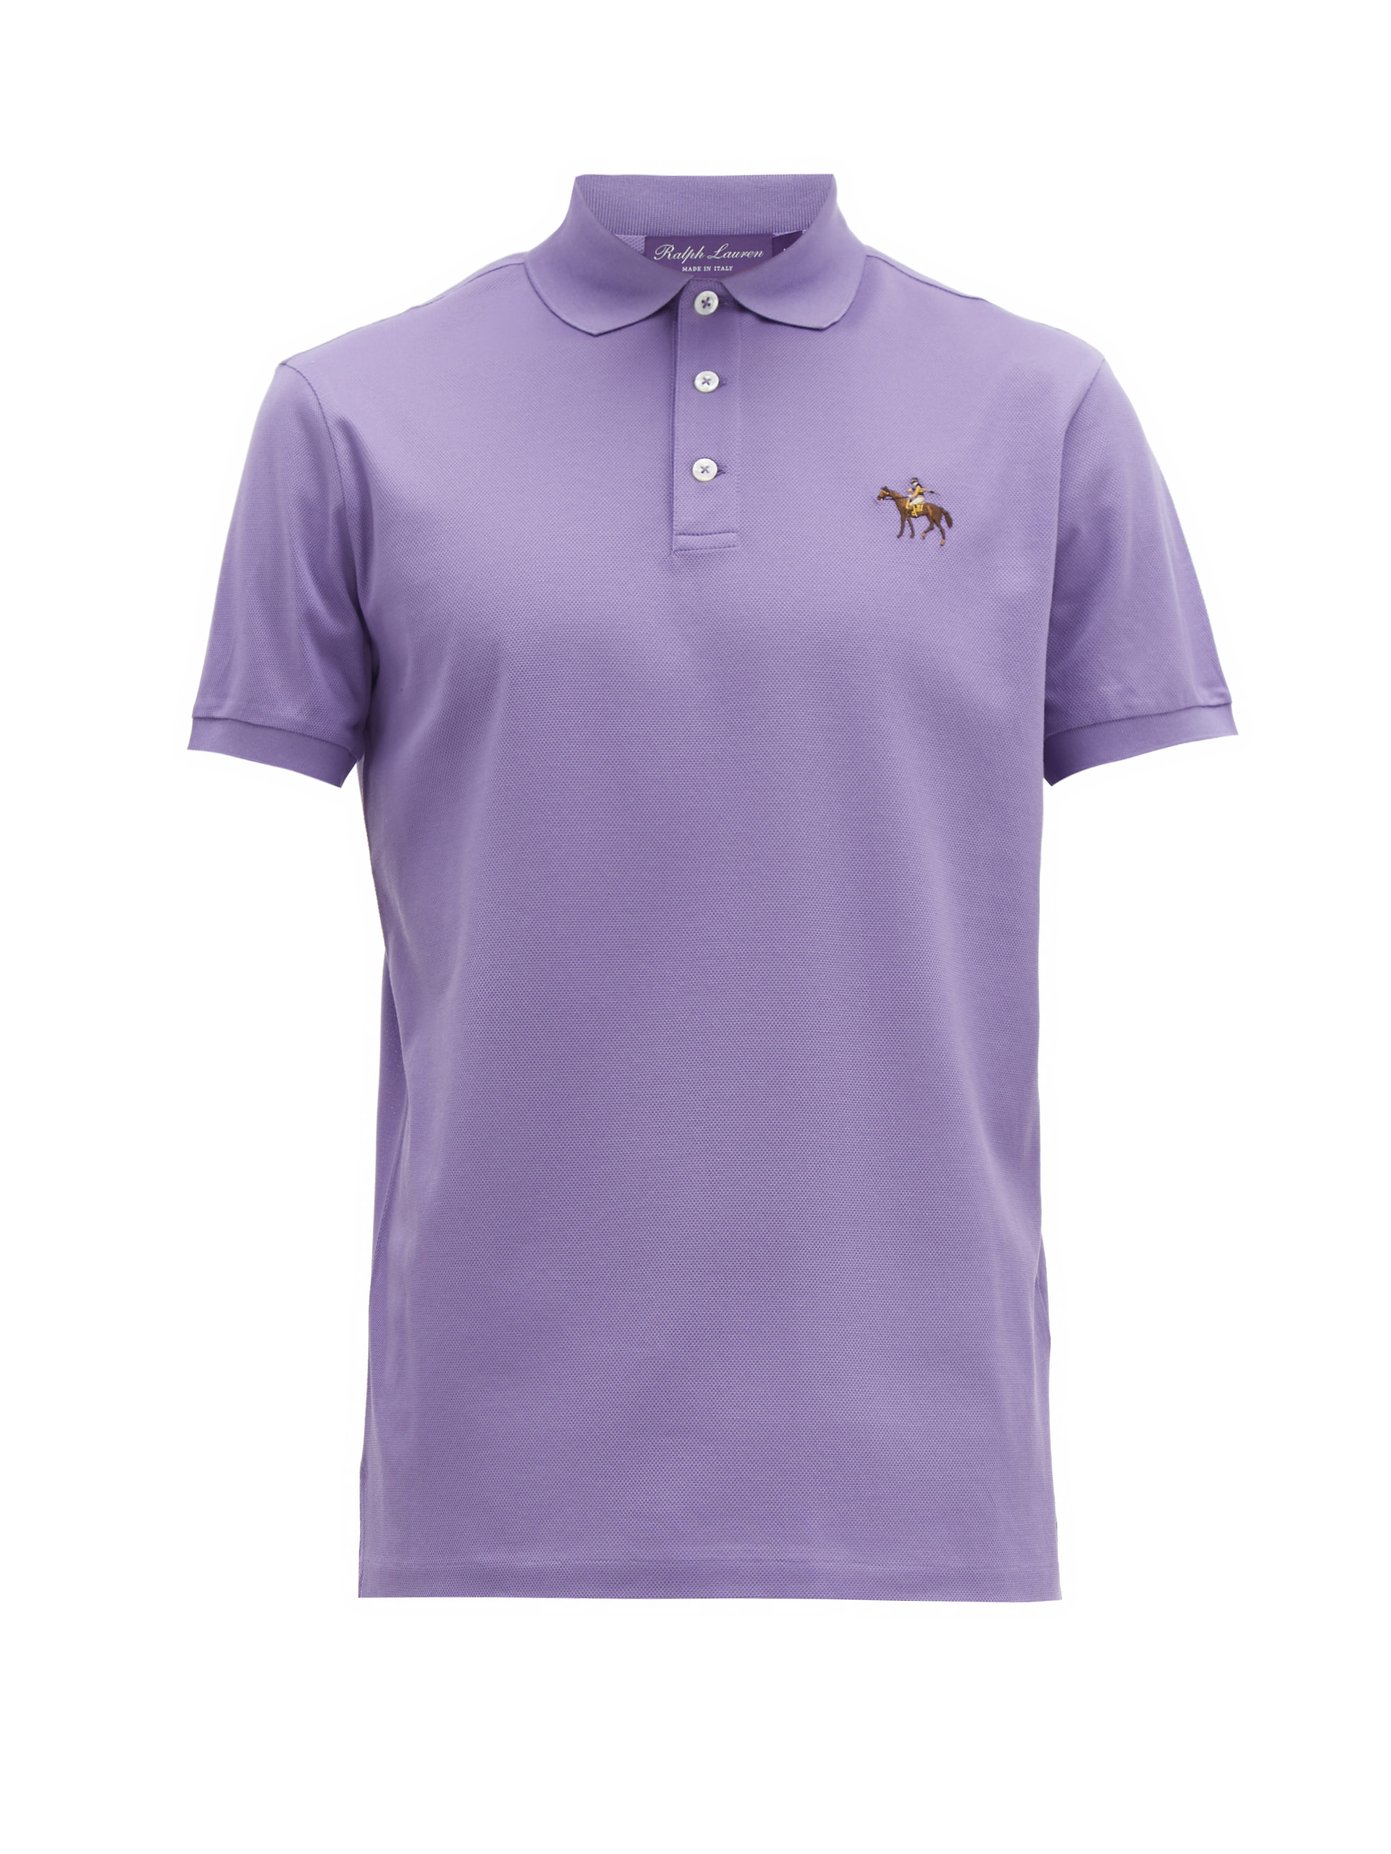 ralph lauren purple label shirt